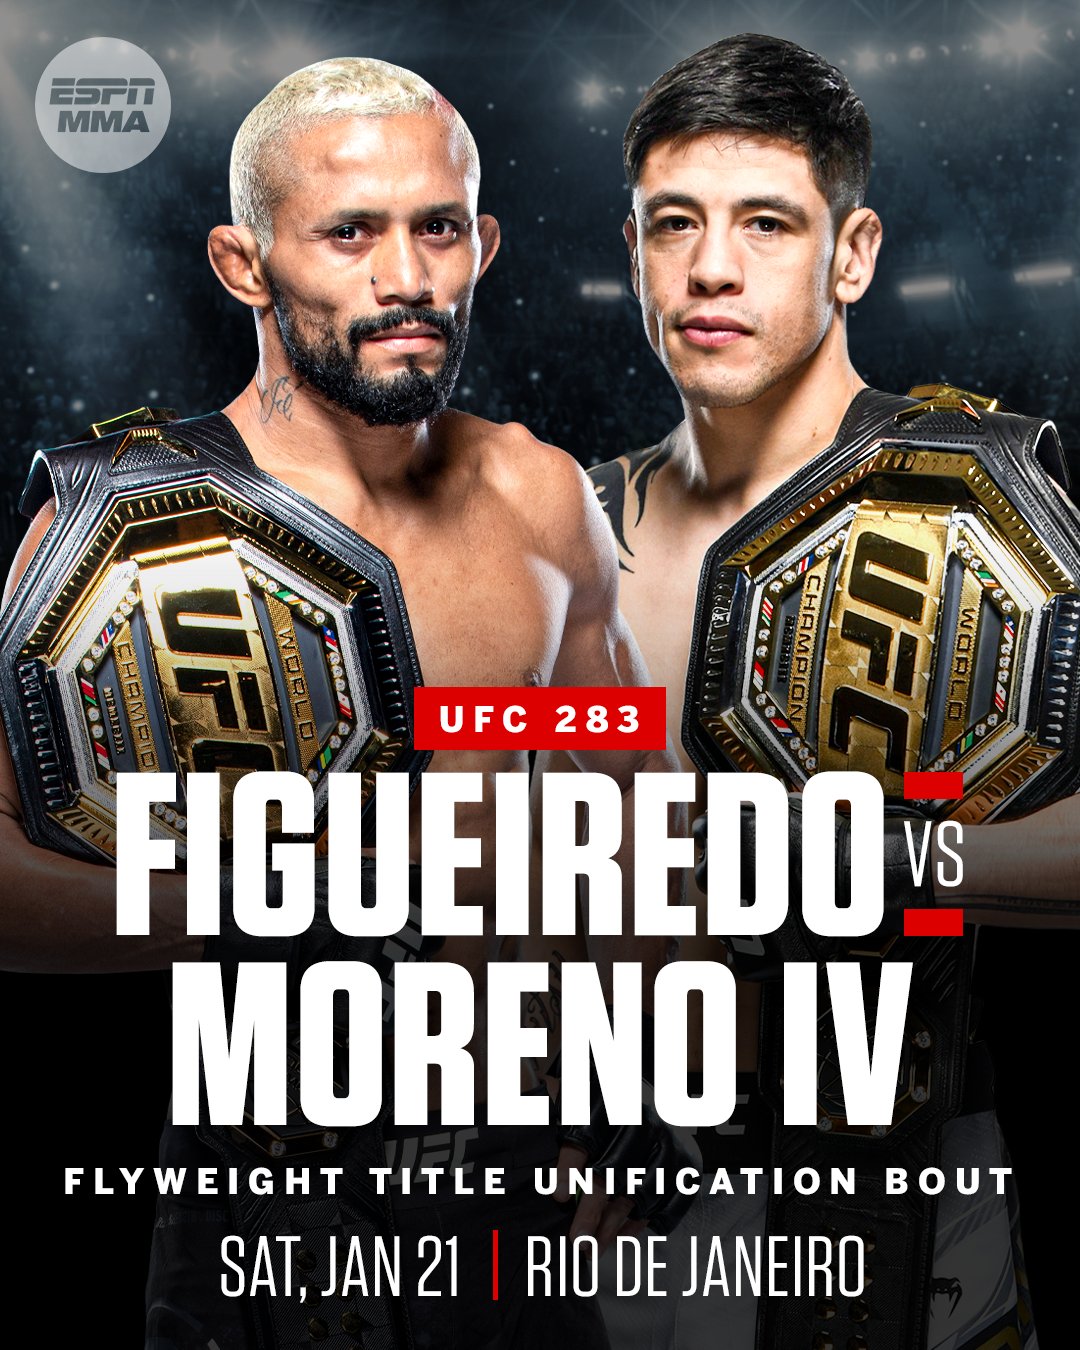 UFC 283 Fight Breakdown Deiveson Figueiredo vs